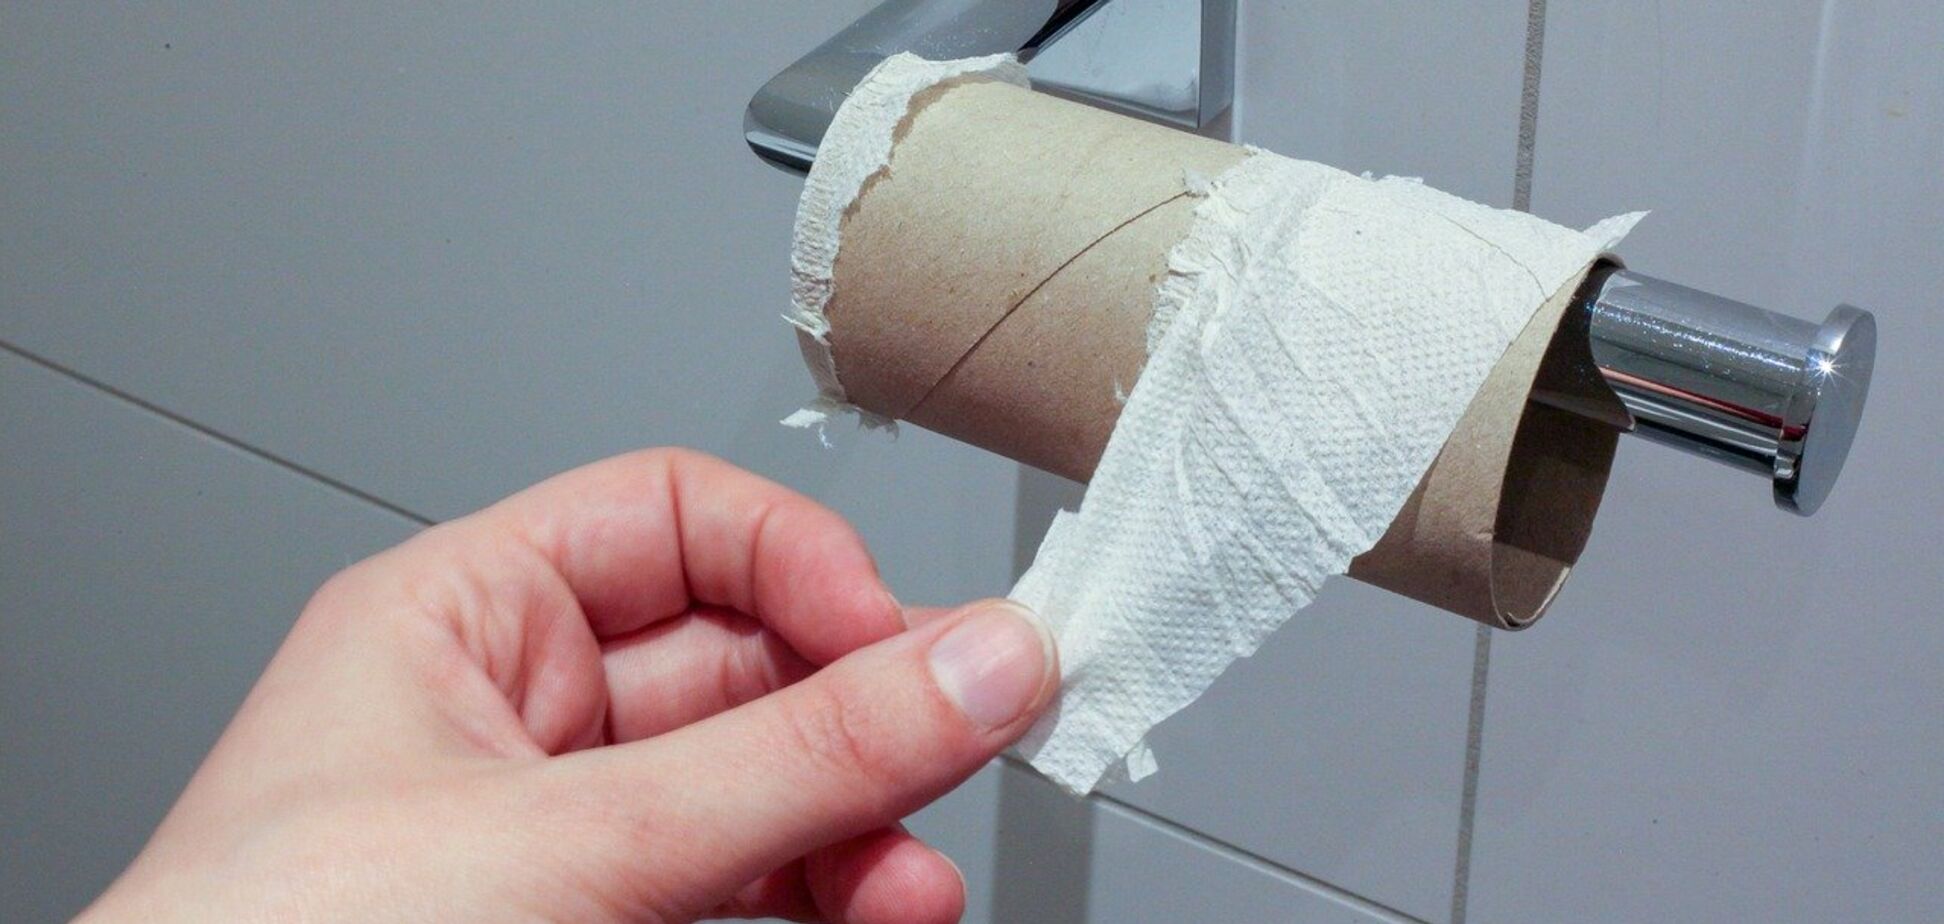 Мужчина на карантине случайно нашел в кладовке сотни рулонов туалетной бумаги